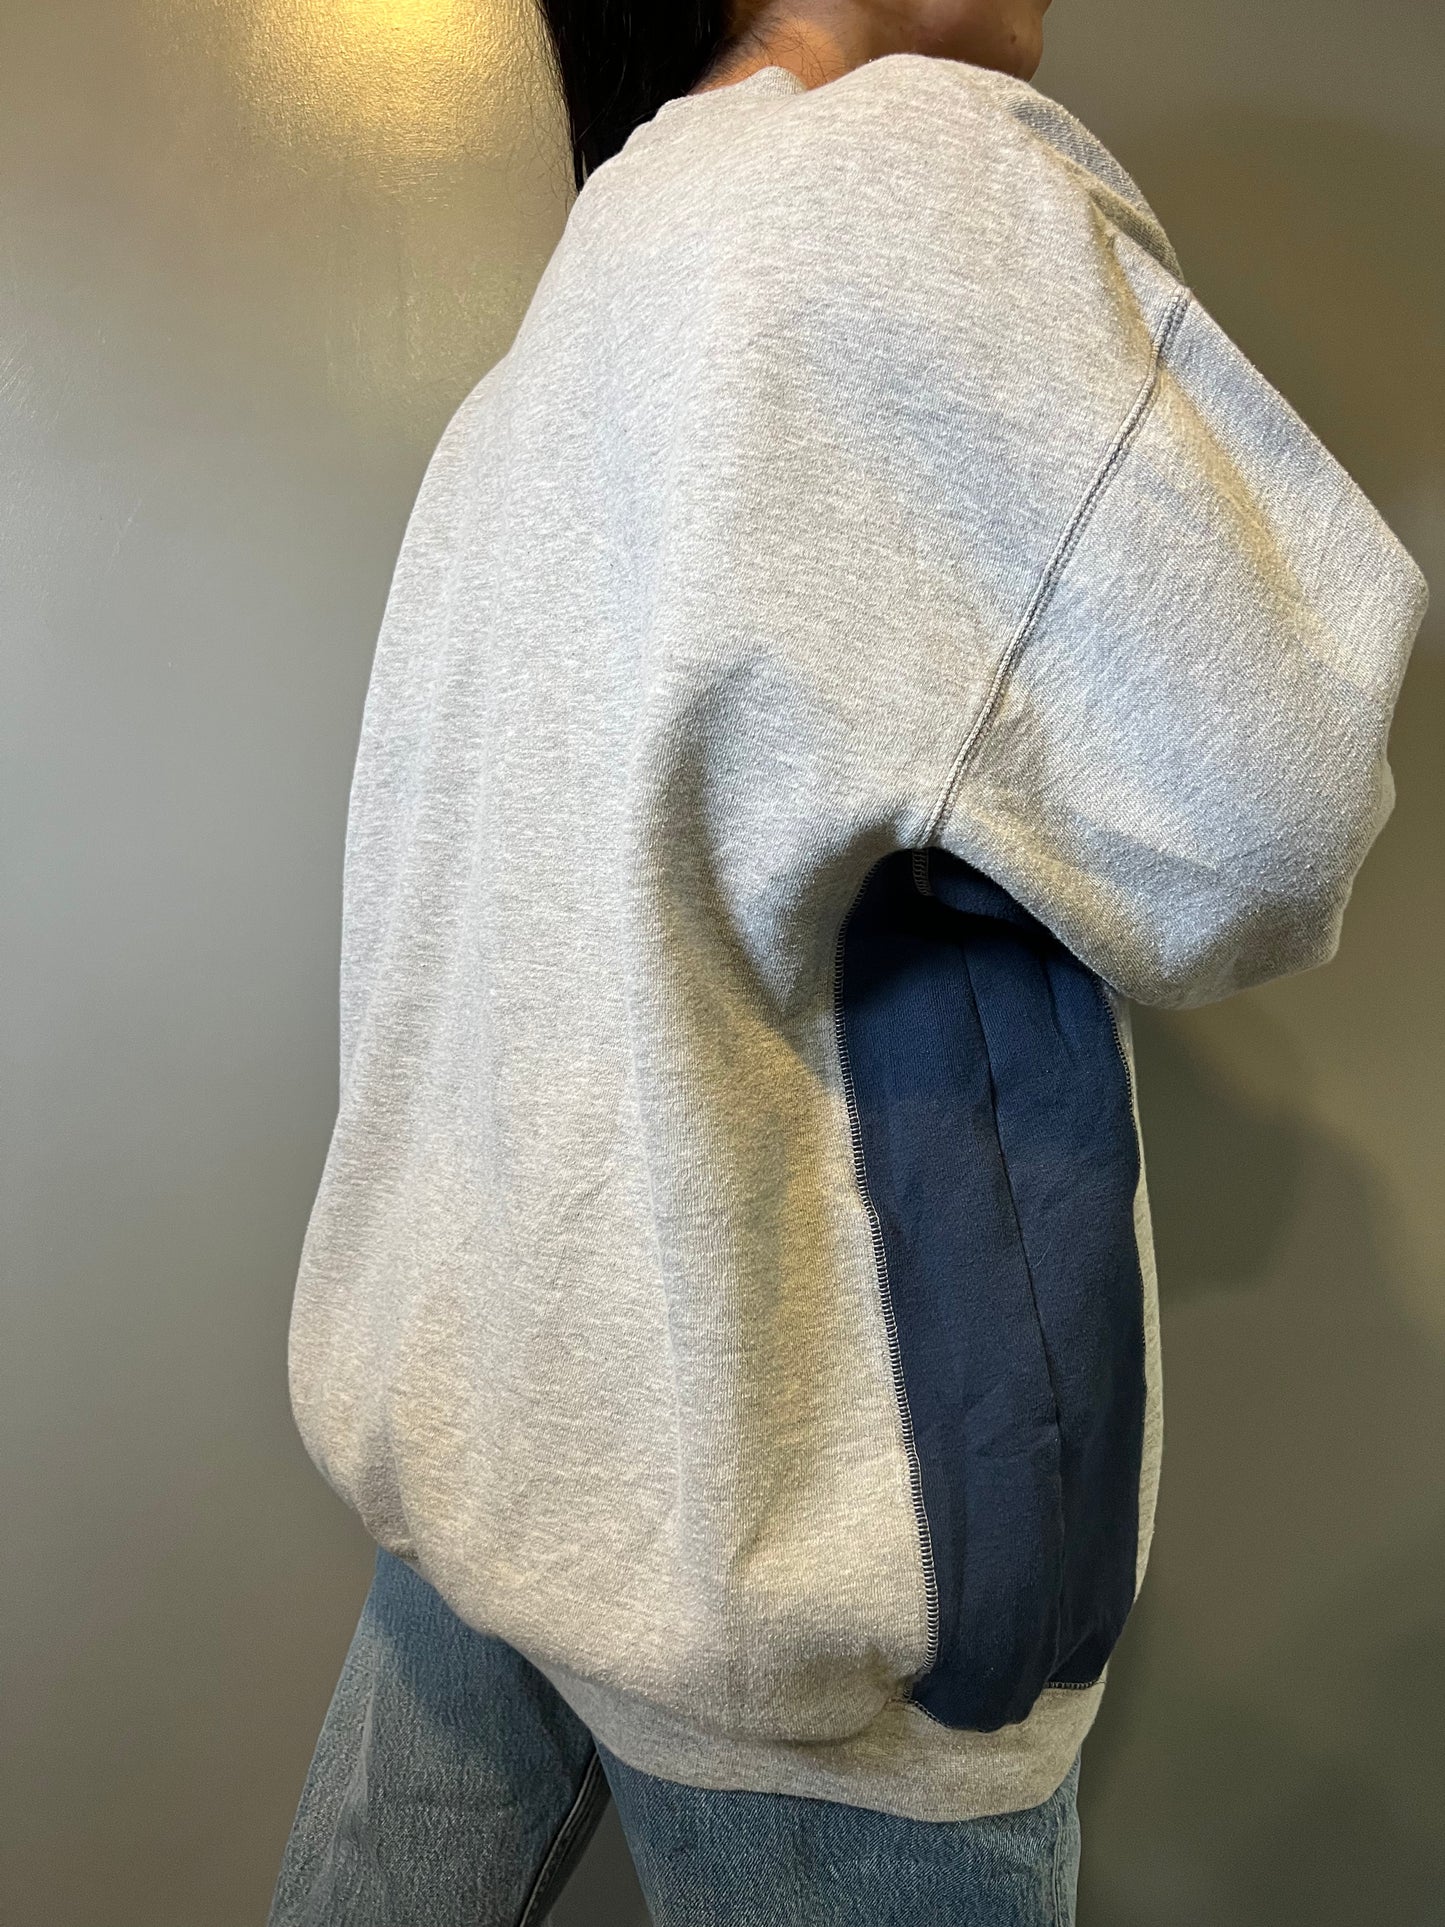 NFL Denver Broncos Sweatshirt - XL